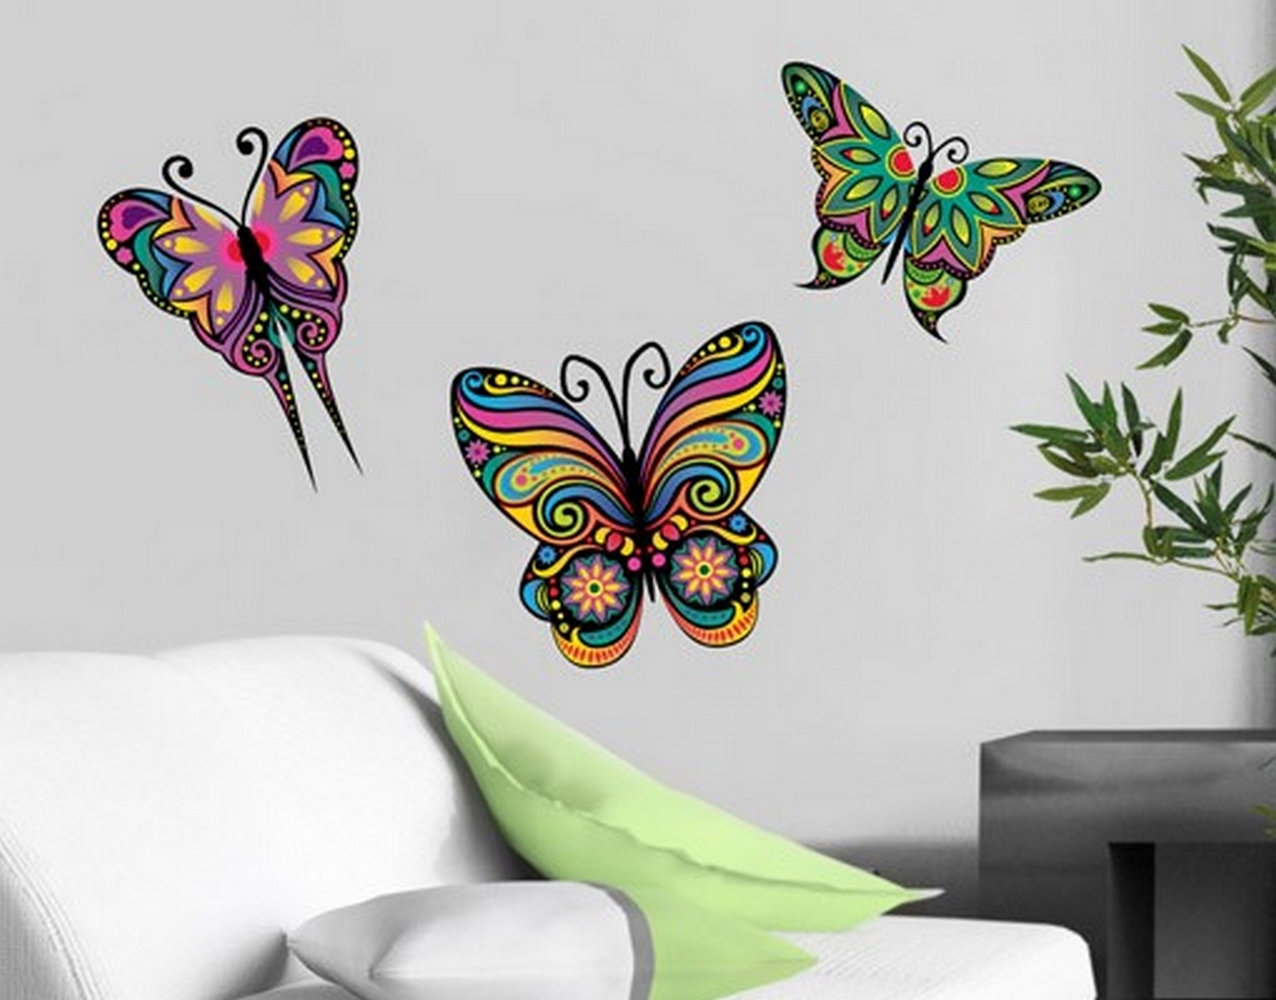 East Urban Home Wandtattoo Schmetterling Mandala Schmetterlinge | Wandtattoos